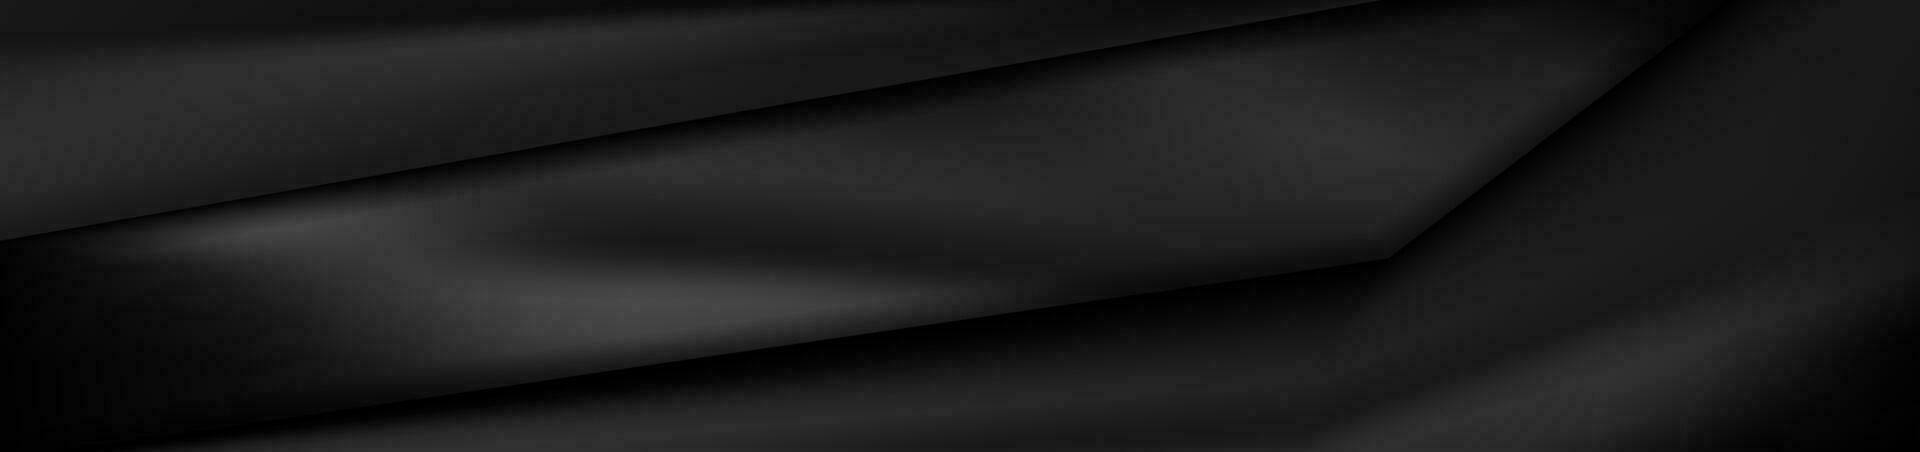 abstract zwart glad helling achtergrond vector